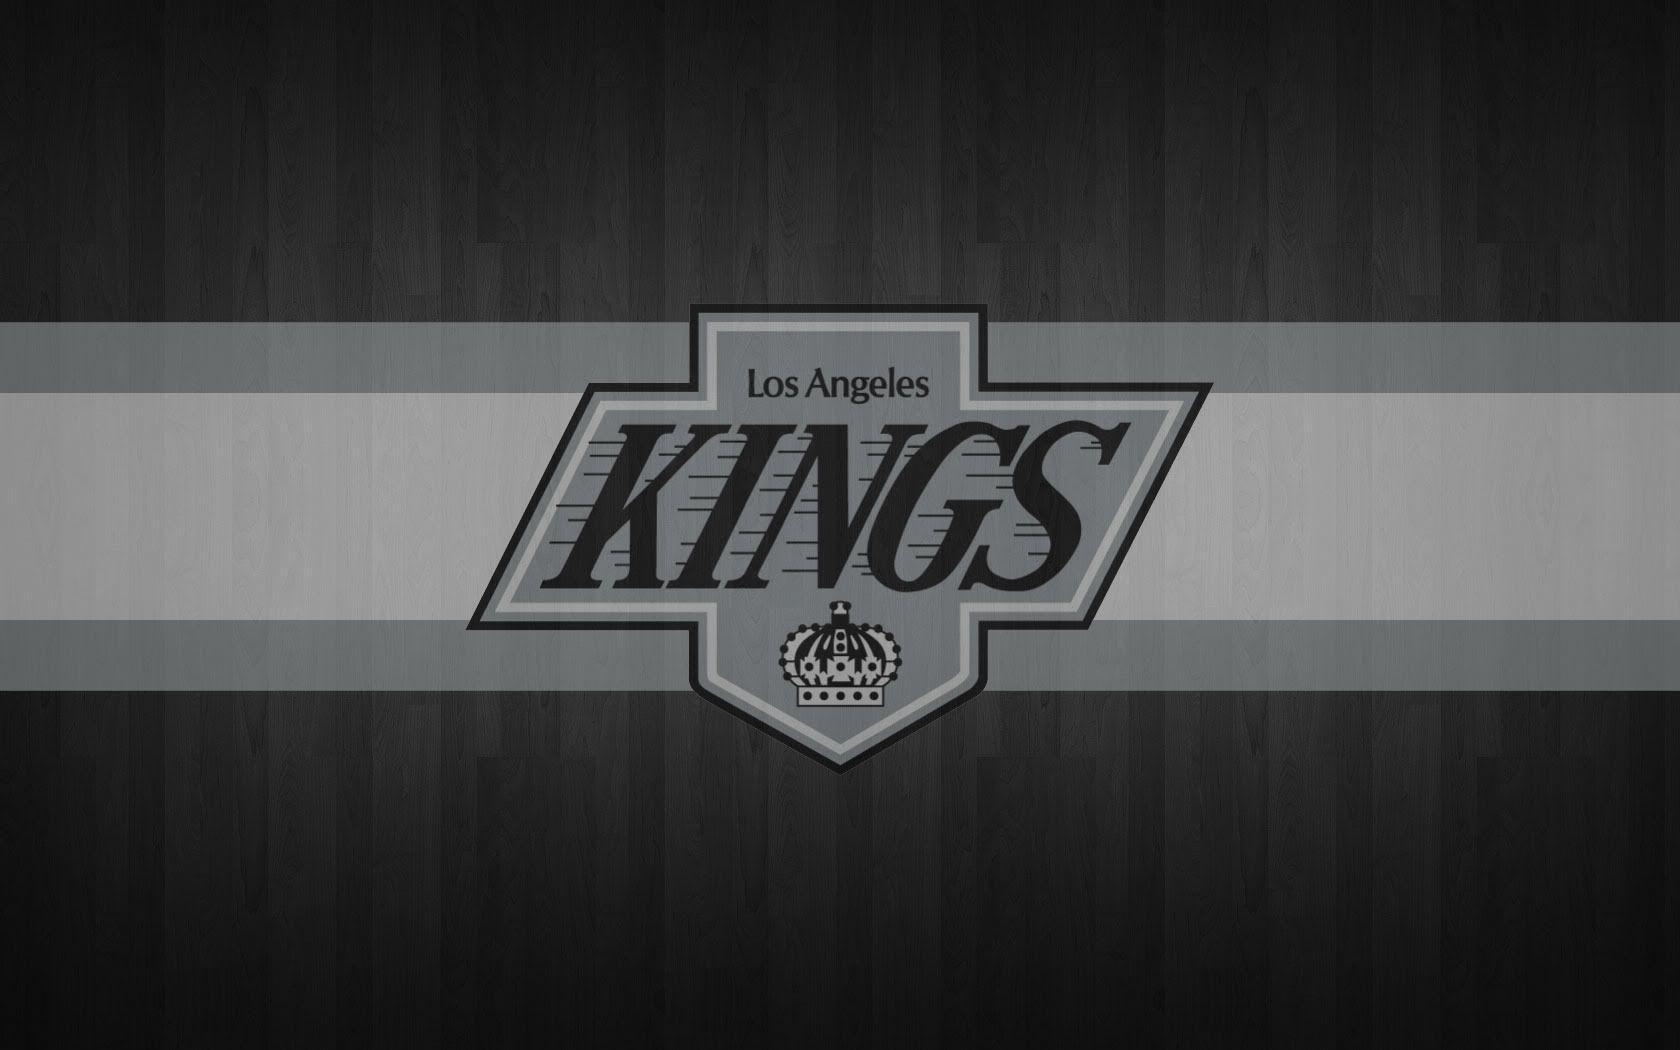 LA Kings wallpaper for desktop, iPhone & iPad